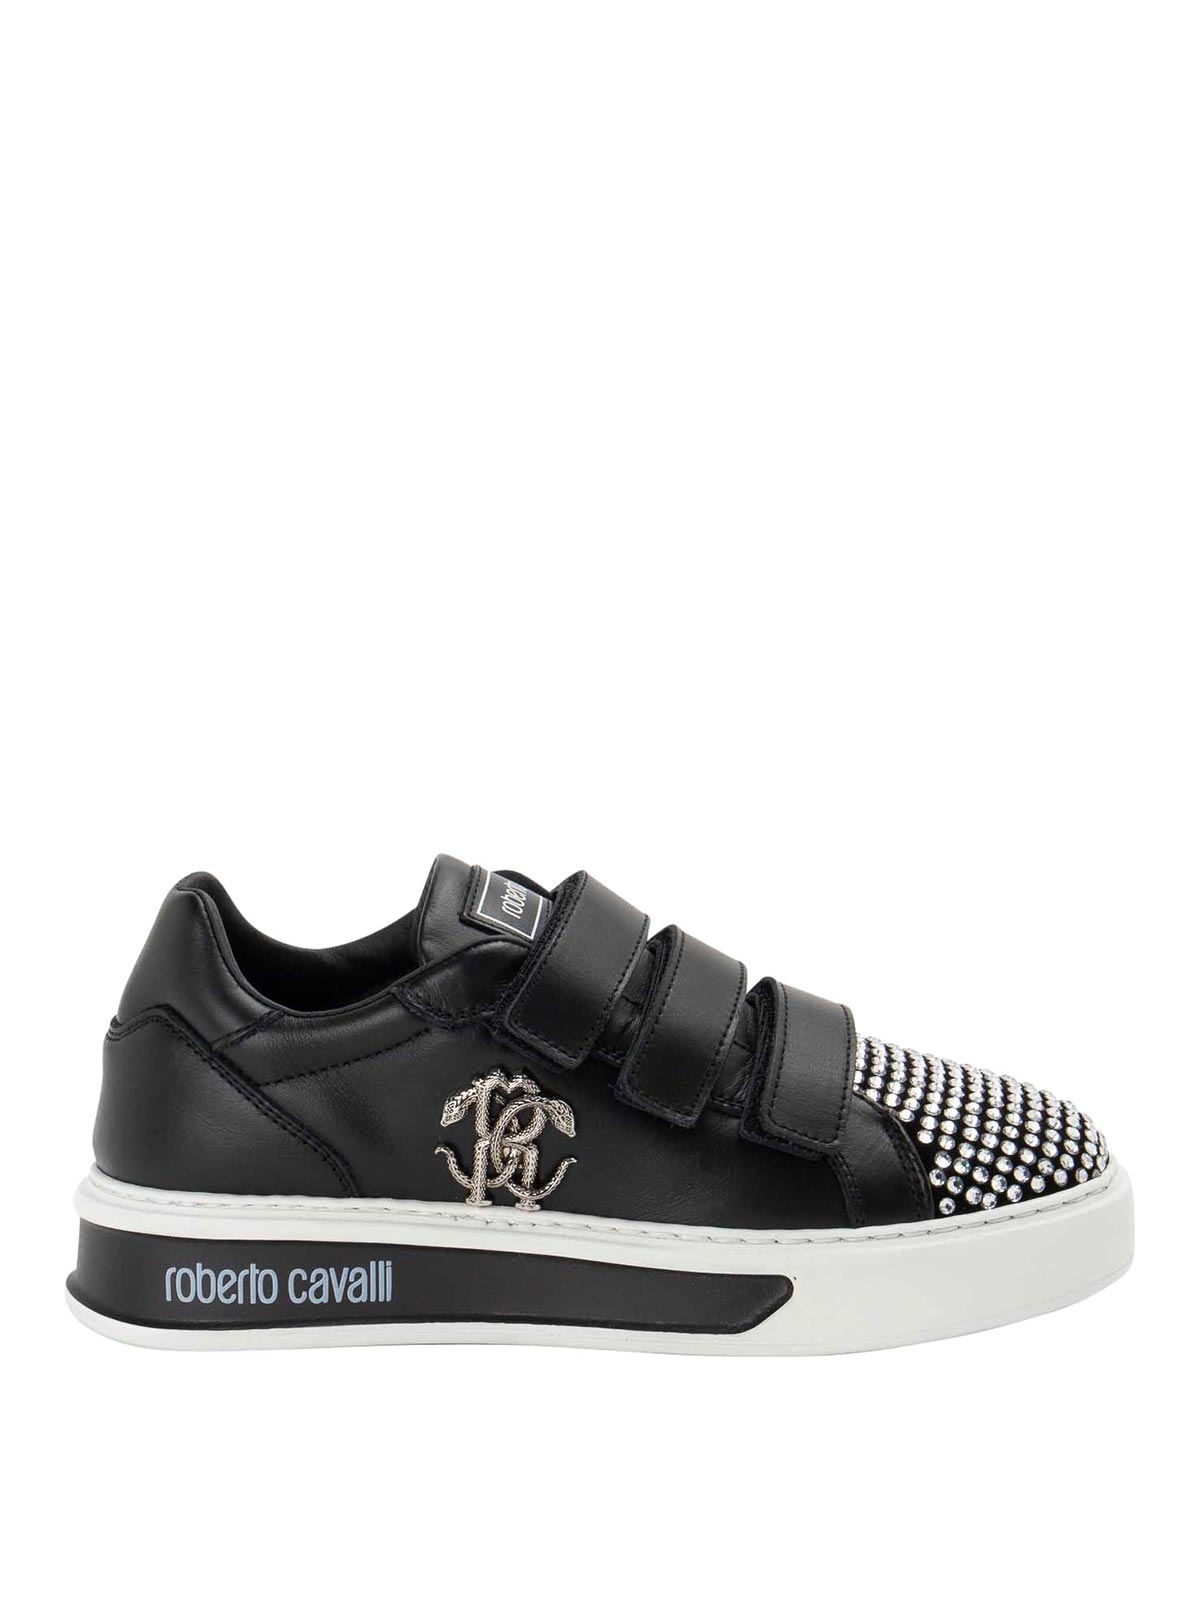 Roberto Cavalli Sneakers In Black